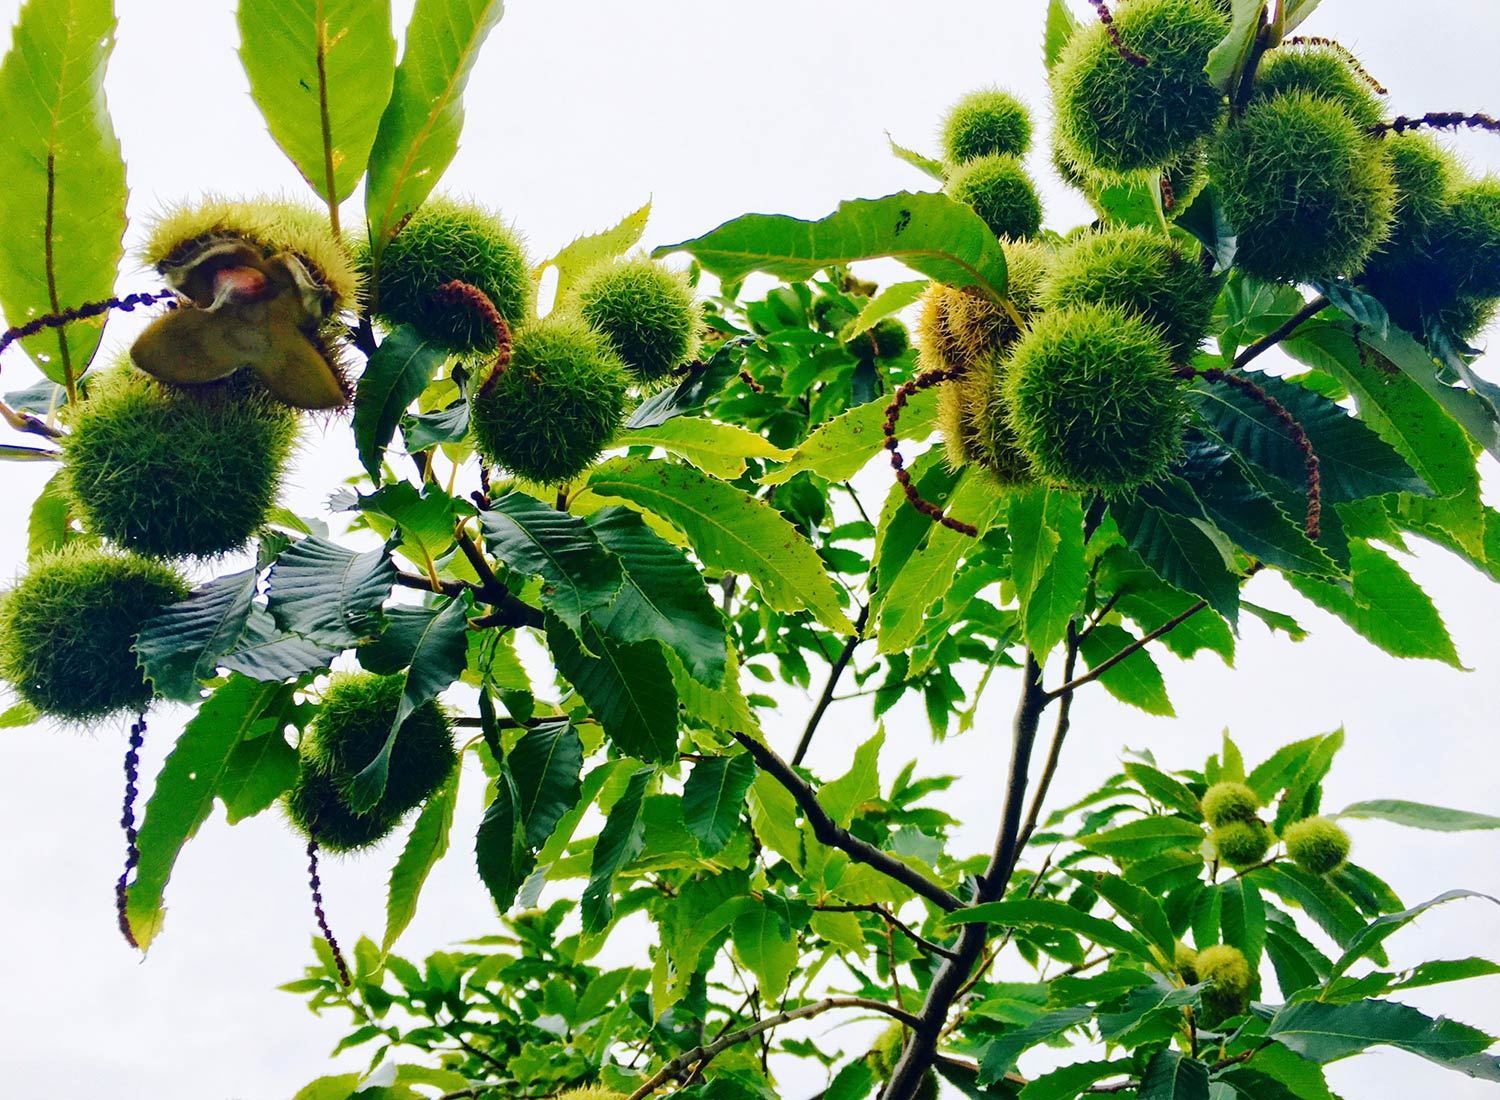 SHO Farm: vegan wild farming in a cold climate | chestnut tree